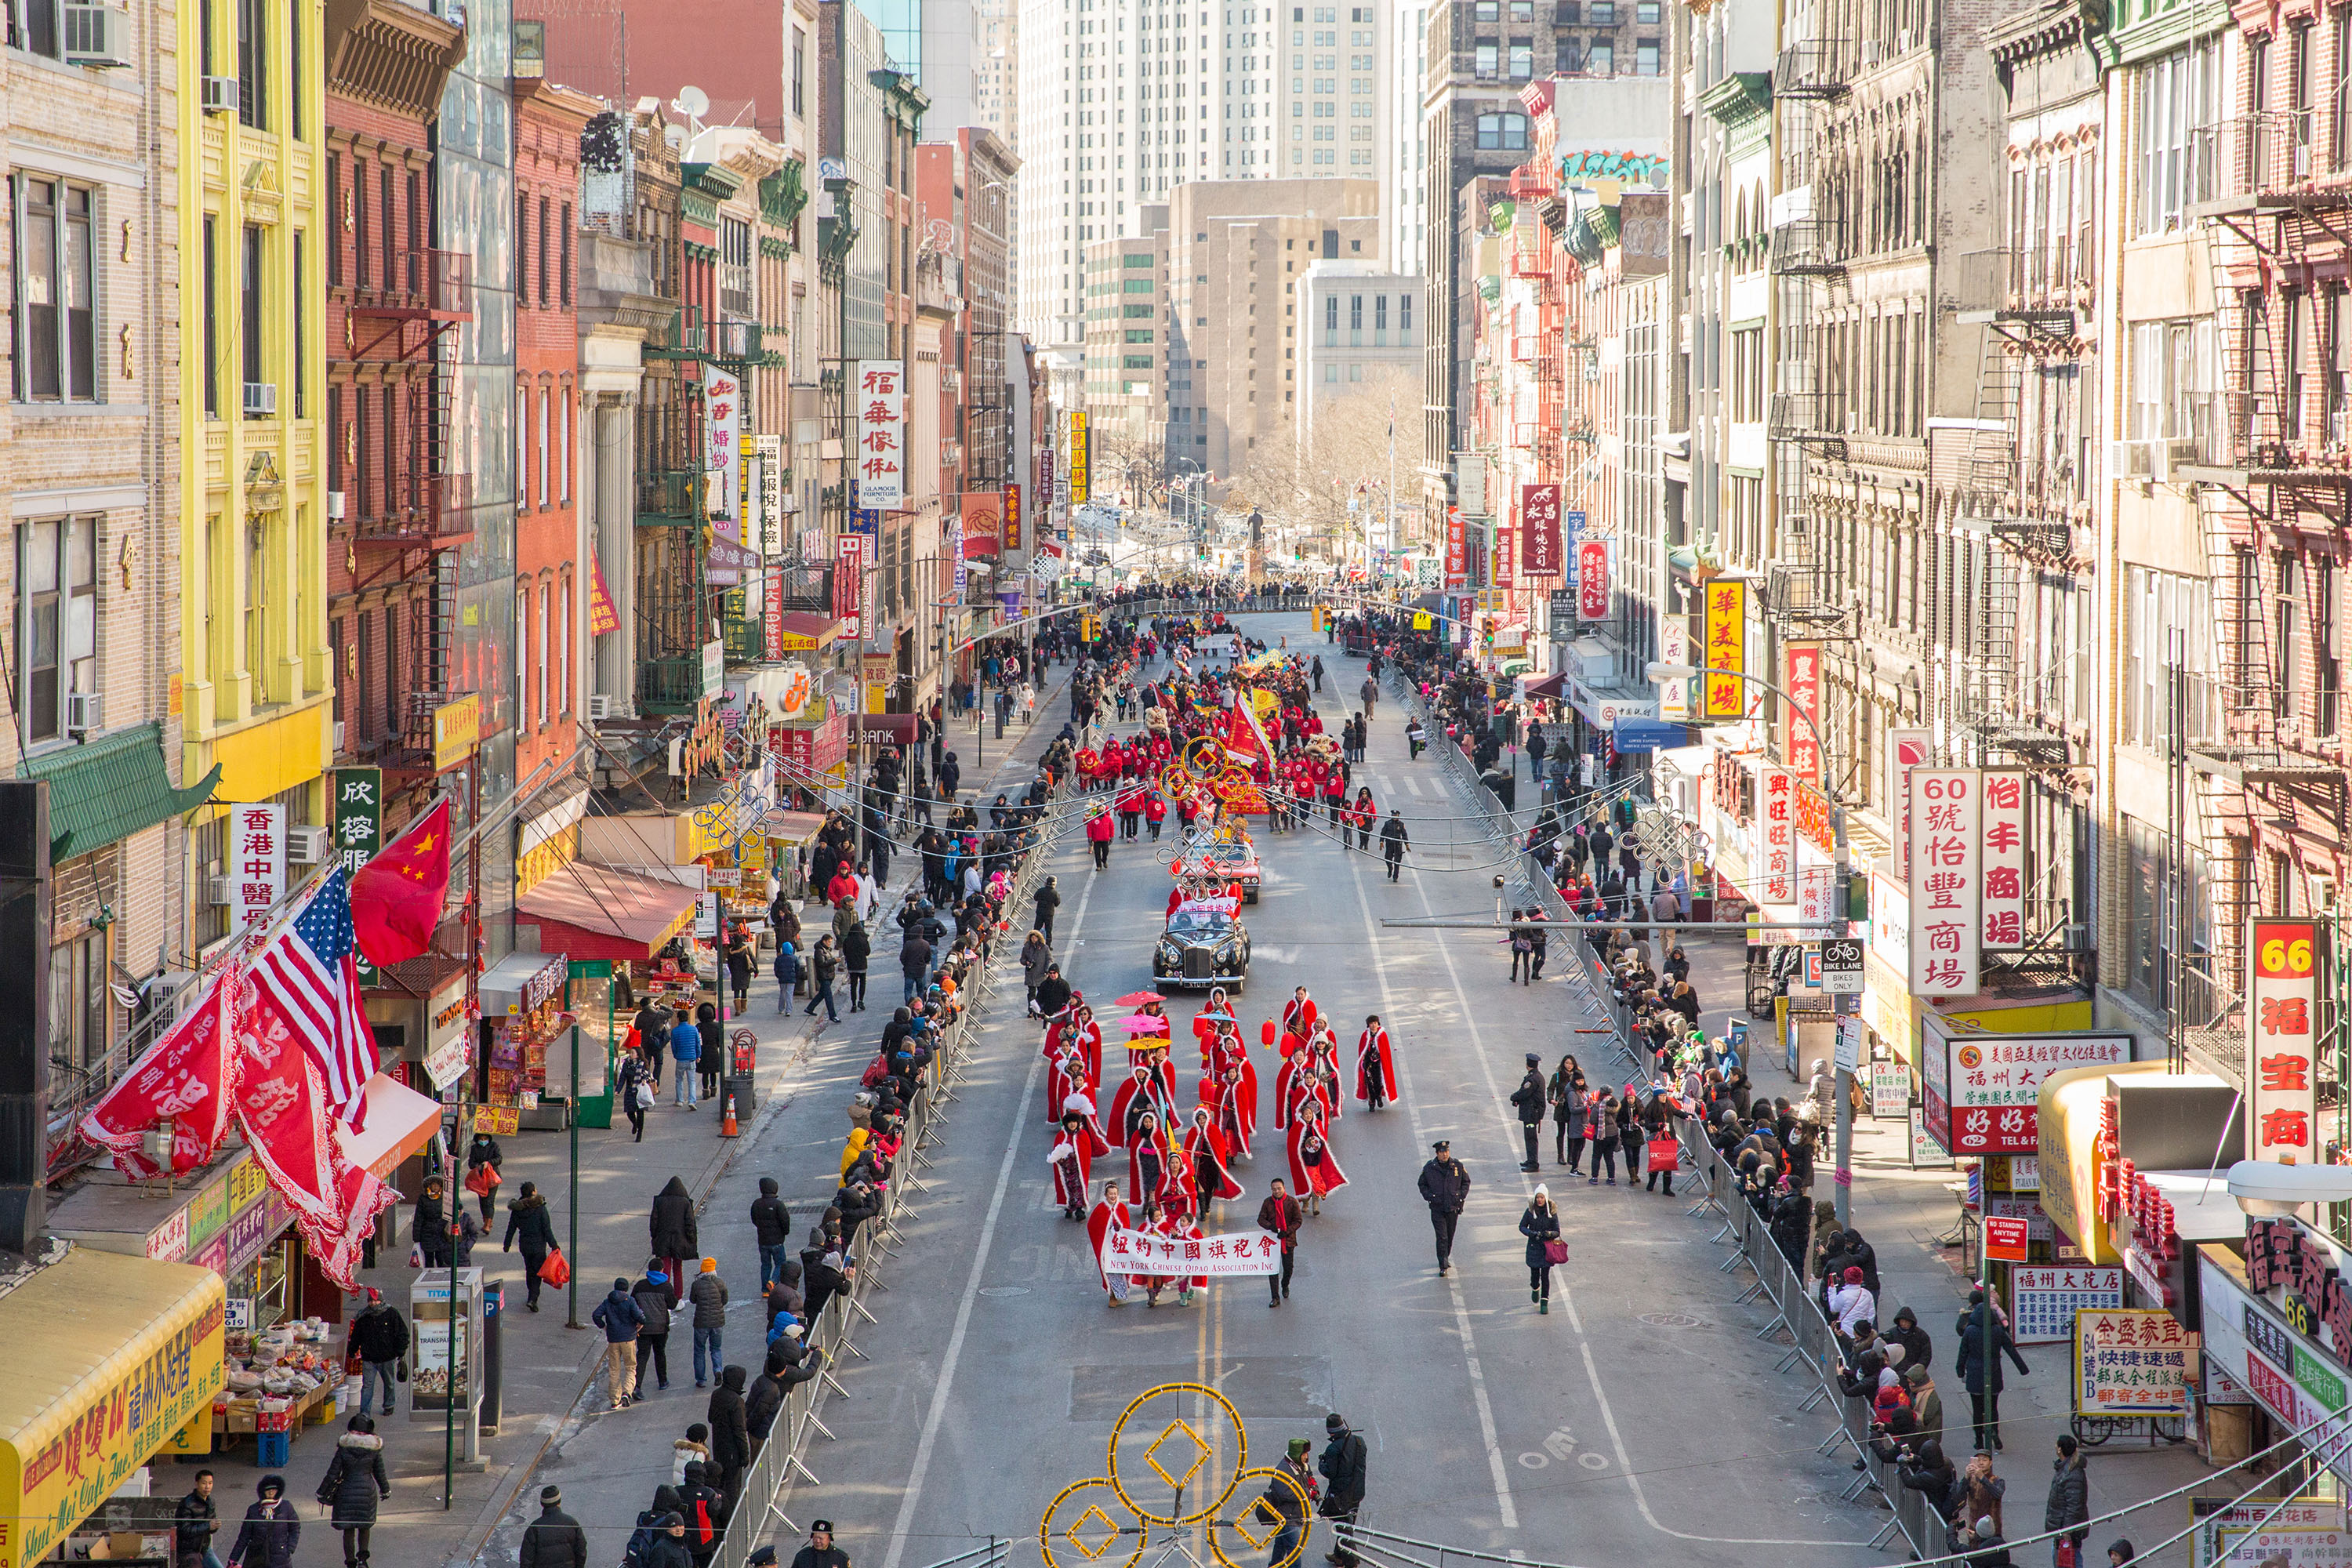 Lunar New Year Parade. Photo: Christopher Postlewaite